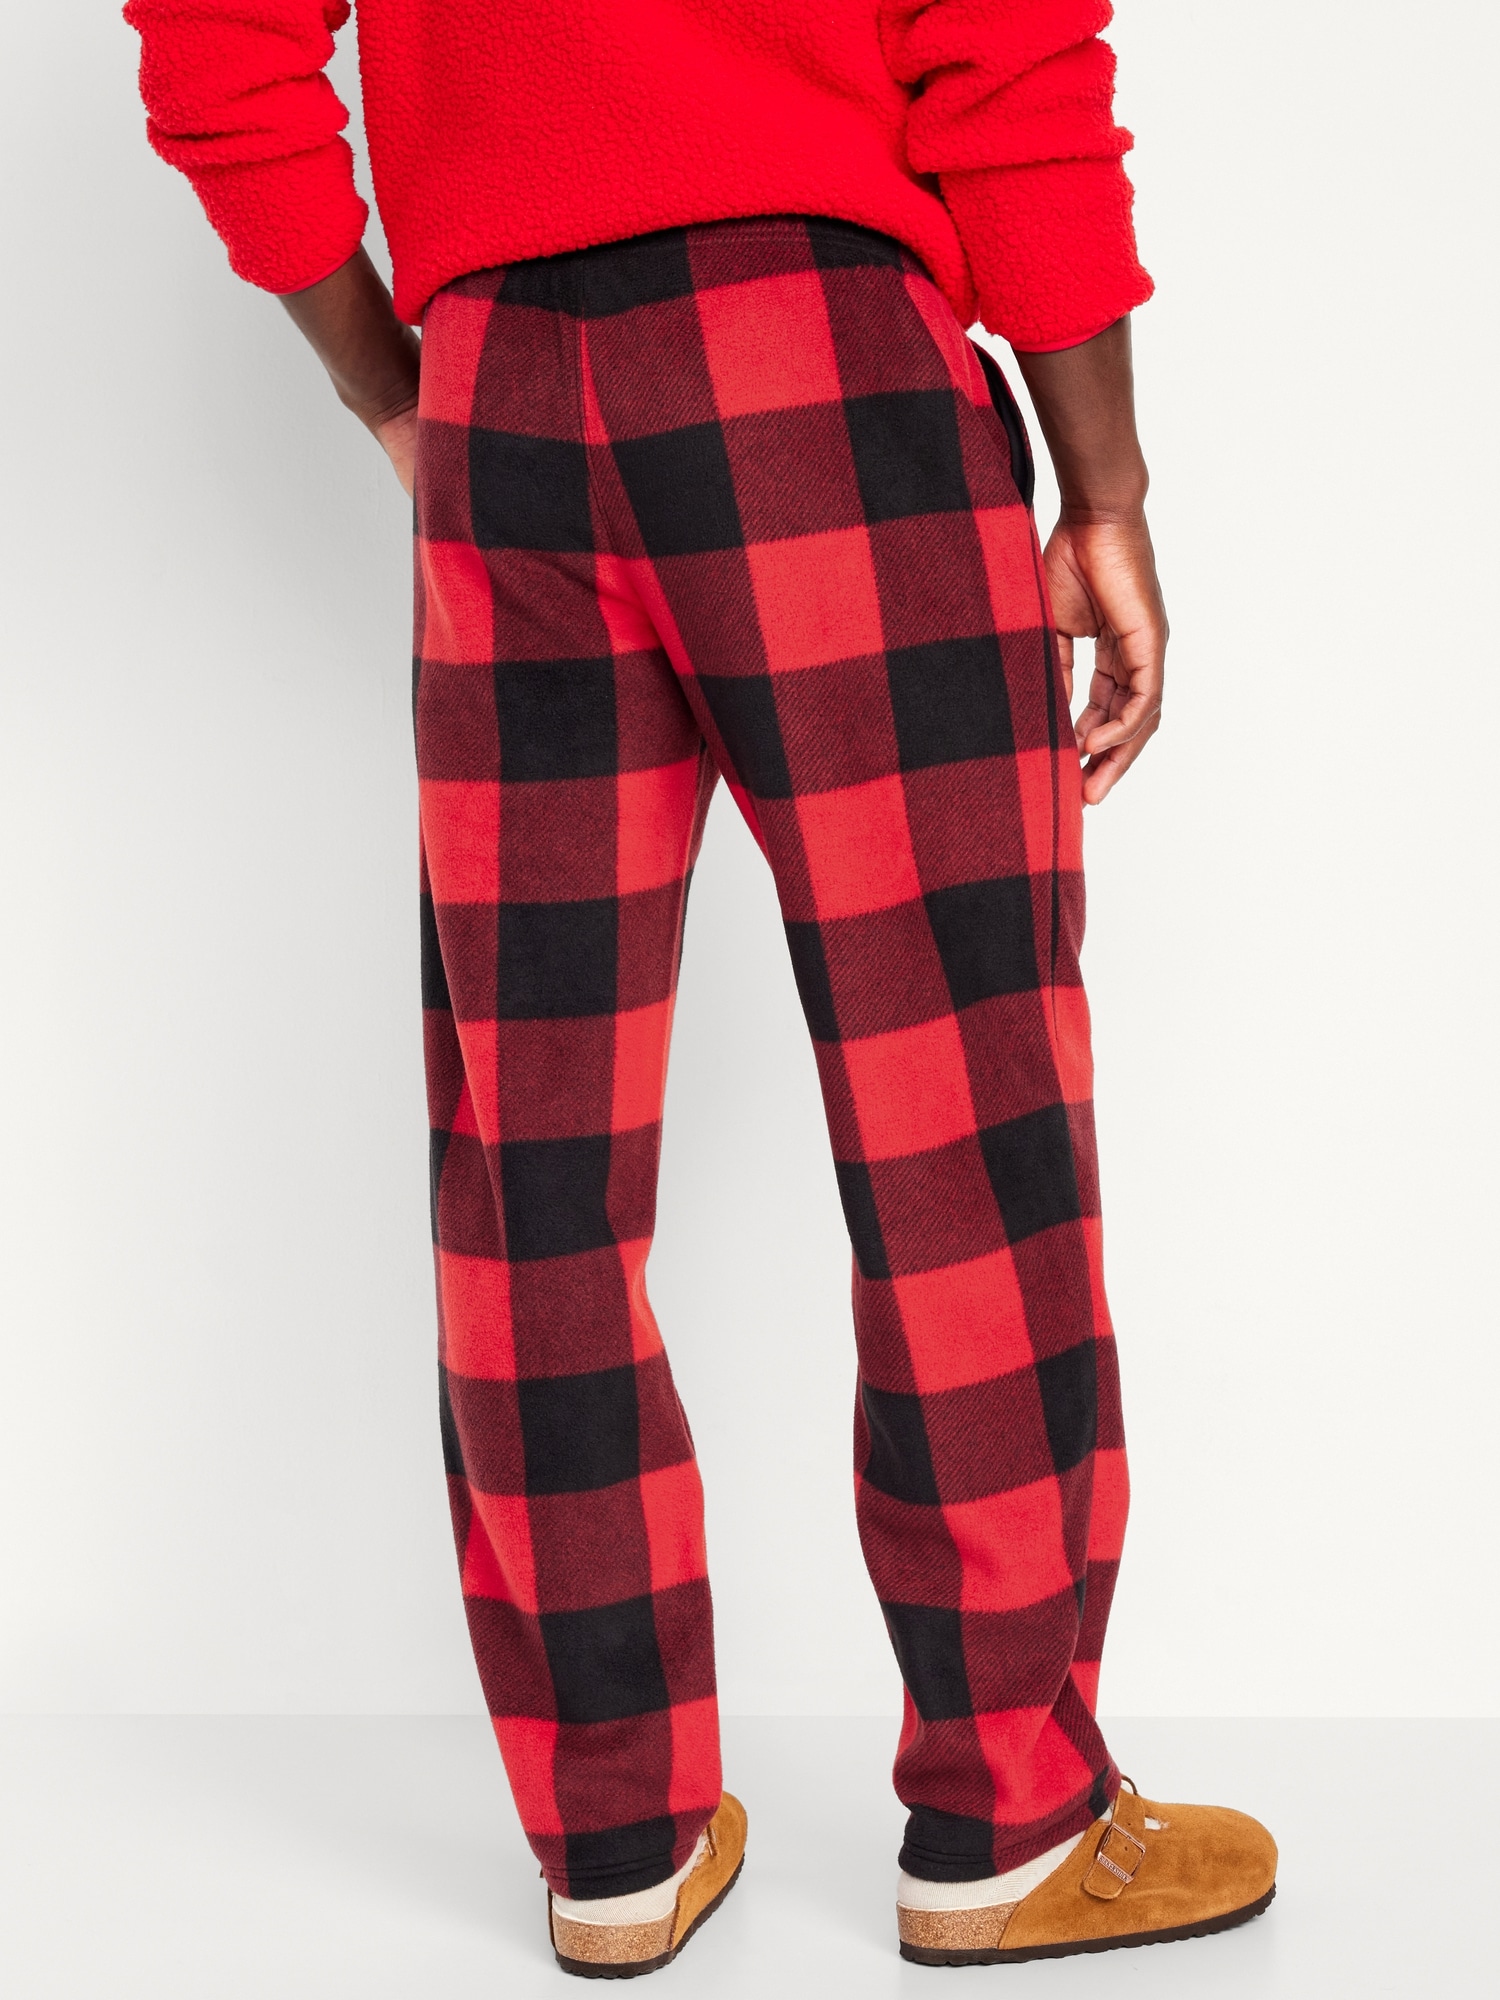 followme Silky Fleece Buffalo Plaid Pajama Pants for Women (Red Buffalo  Plaid, Small) 